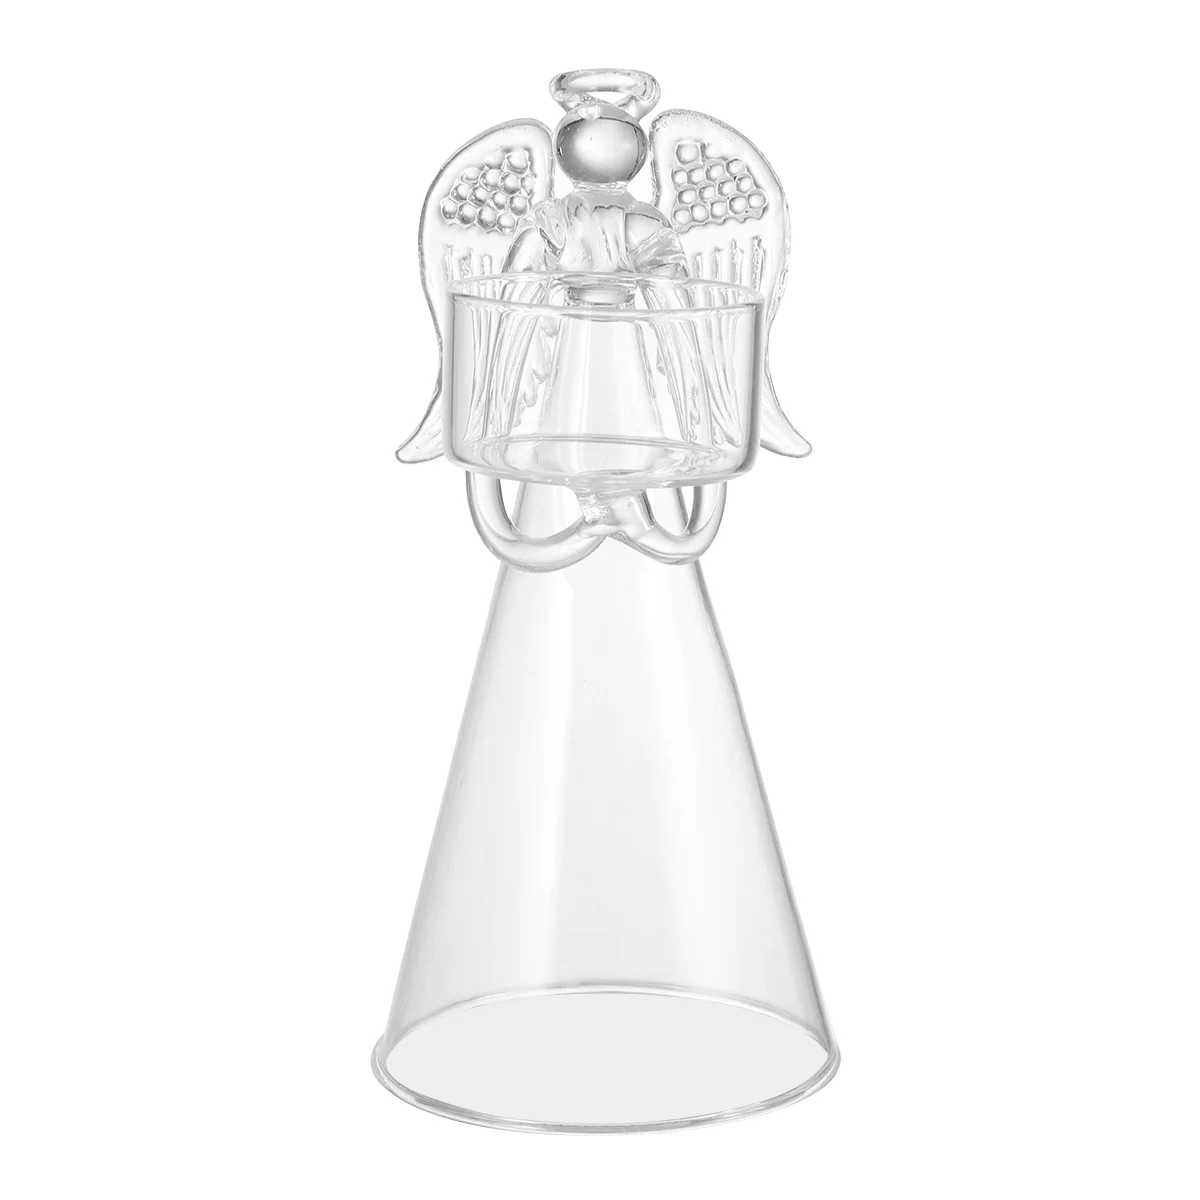 

Holder Angel Christmas Tealight Holders Candlestick Statue Crystal Votive Light Tea Candleholder Cup Memorial Table Adornment